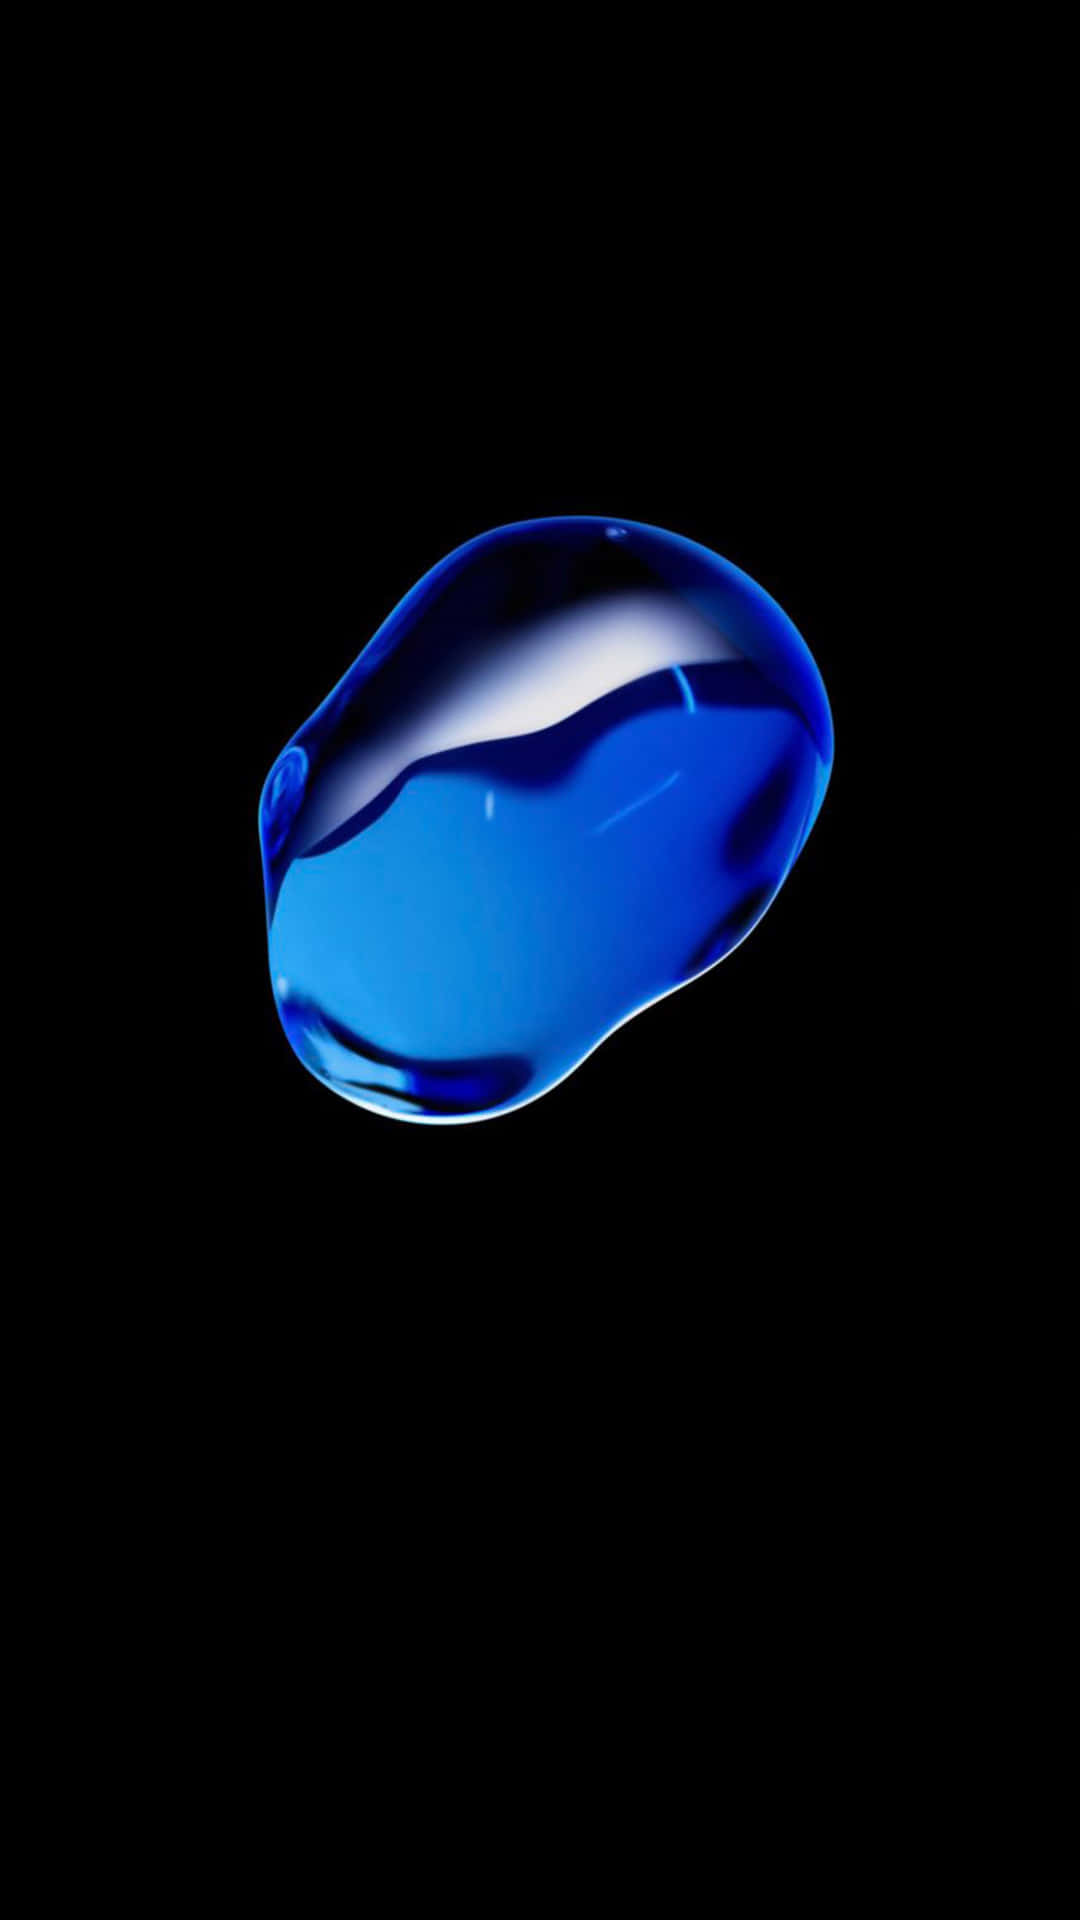 A Blue Liquid On A Black Surface Wallpaper